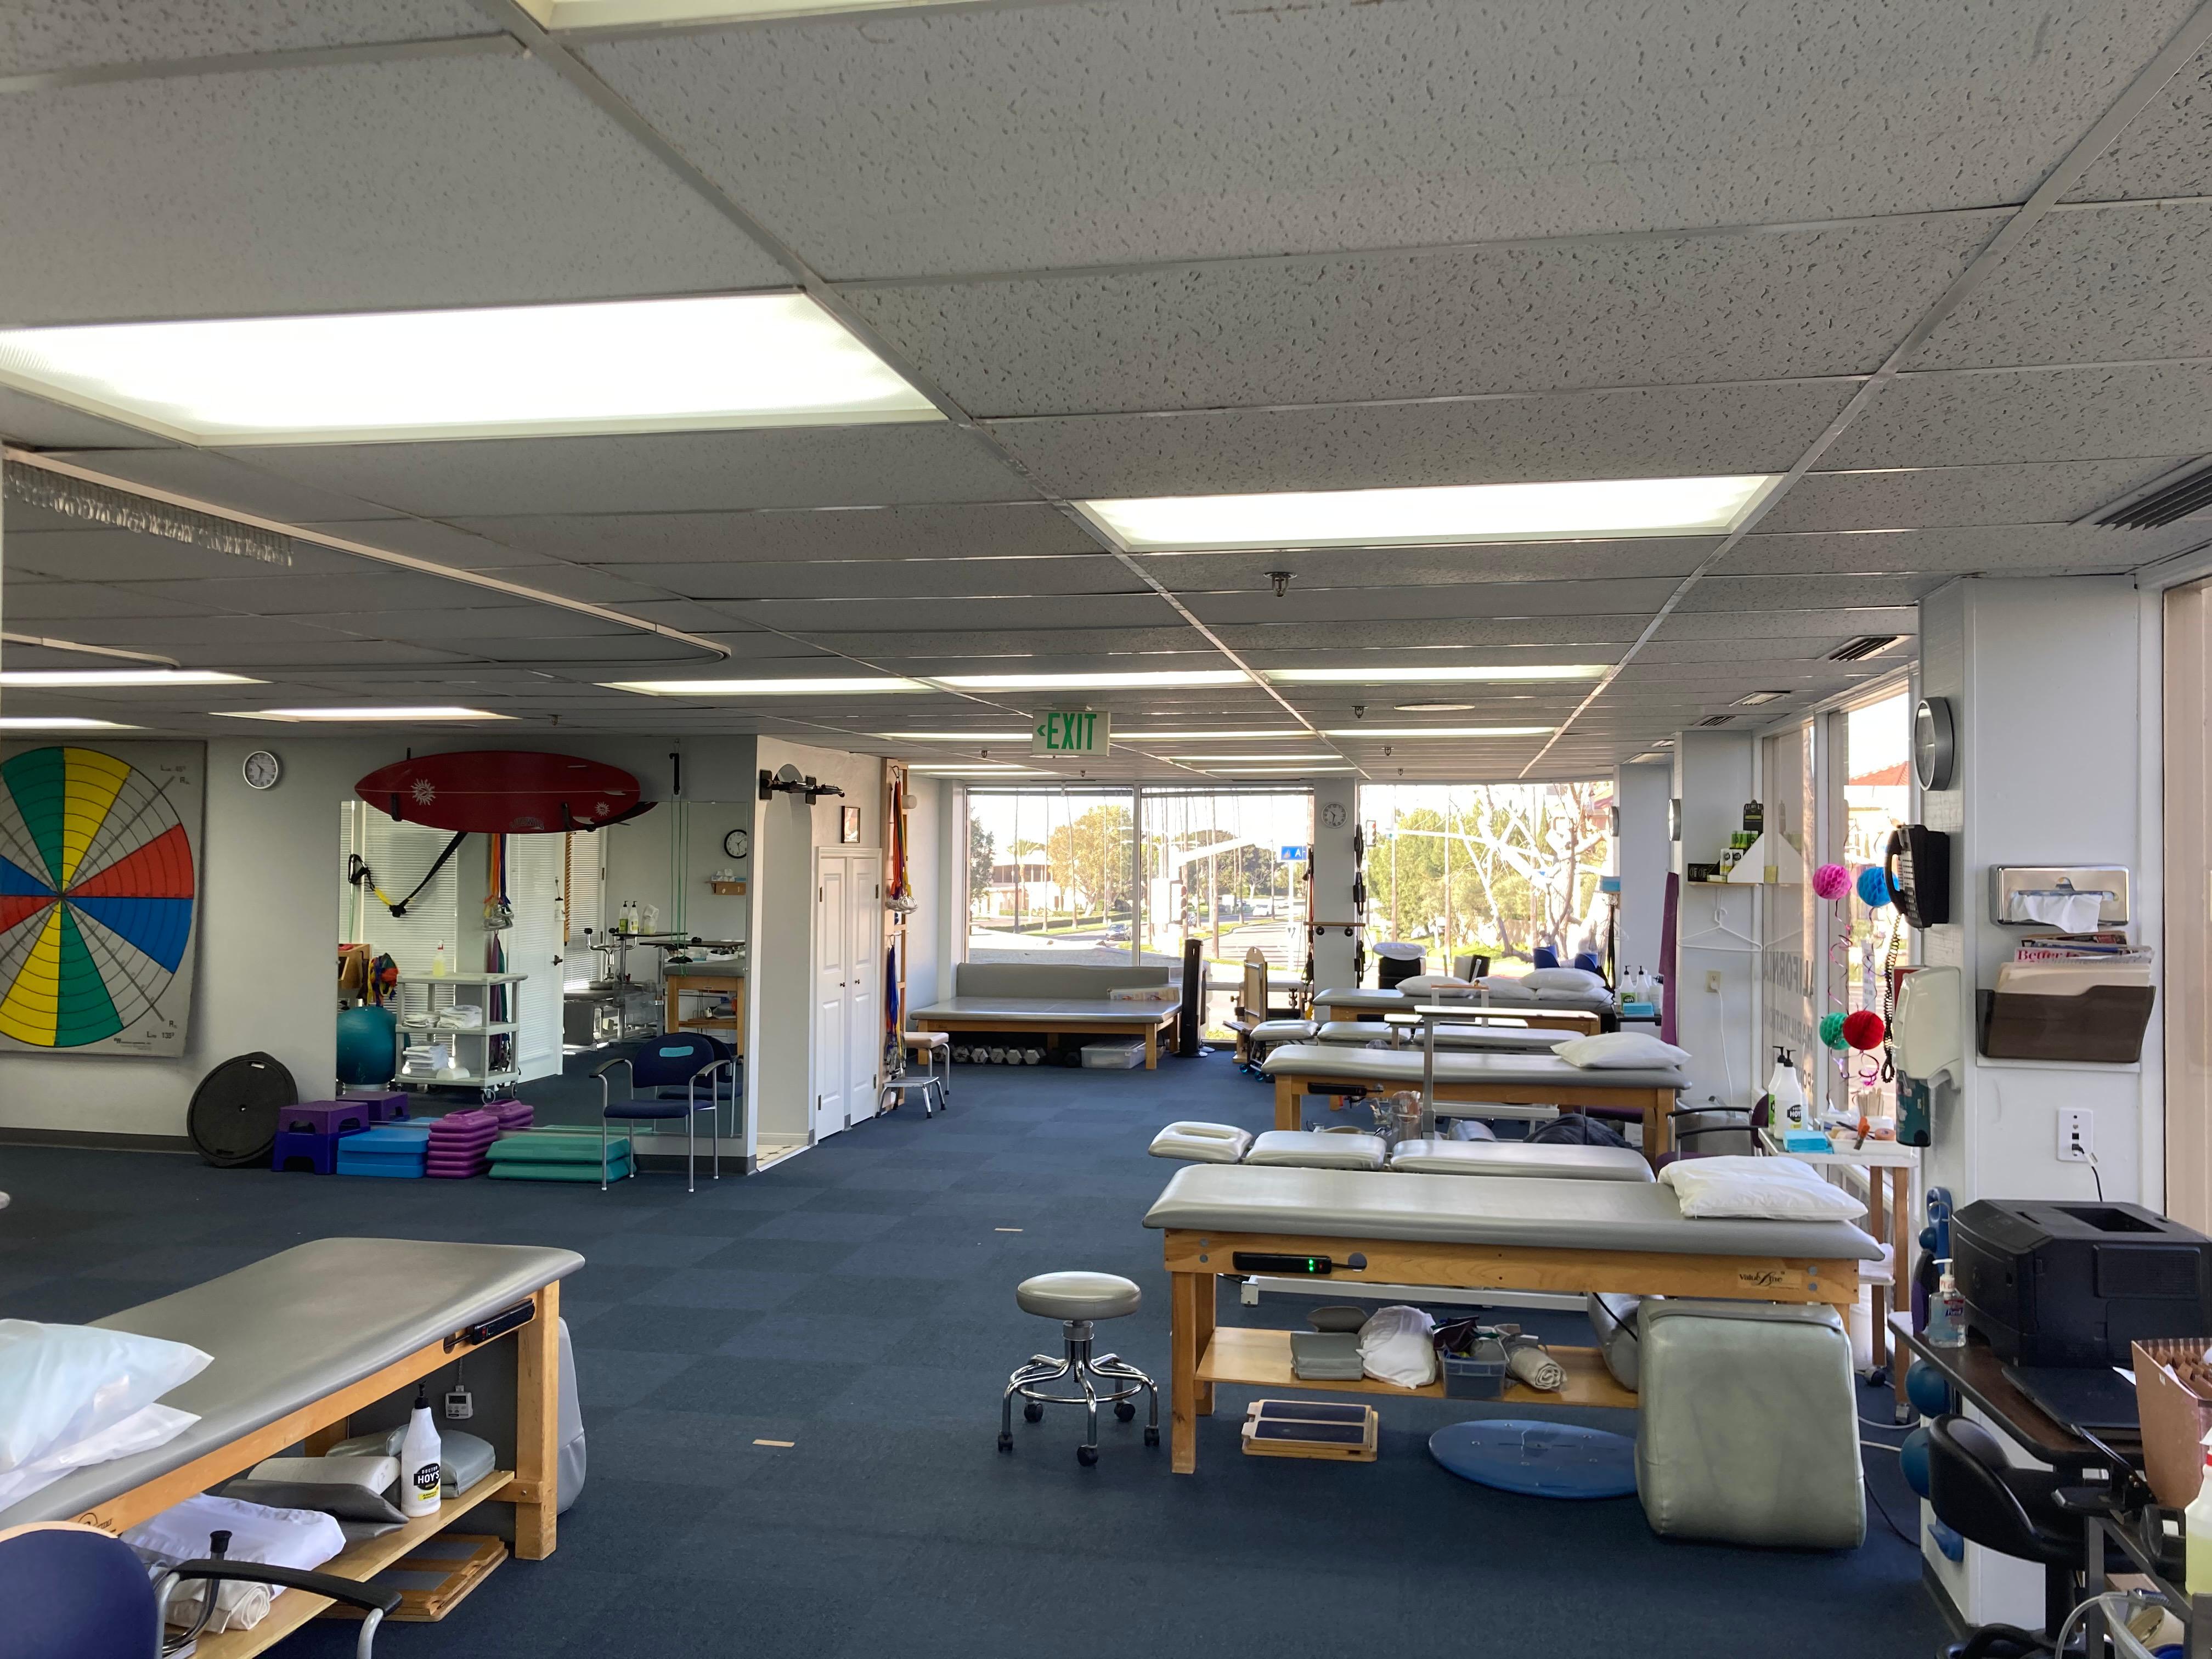 California Rehabilitation and Sports Therapy
200 Newport Center Dr
Newport Beach